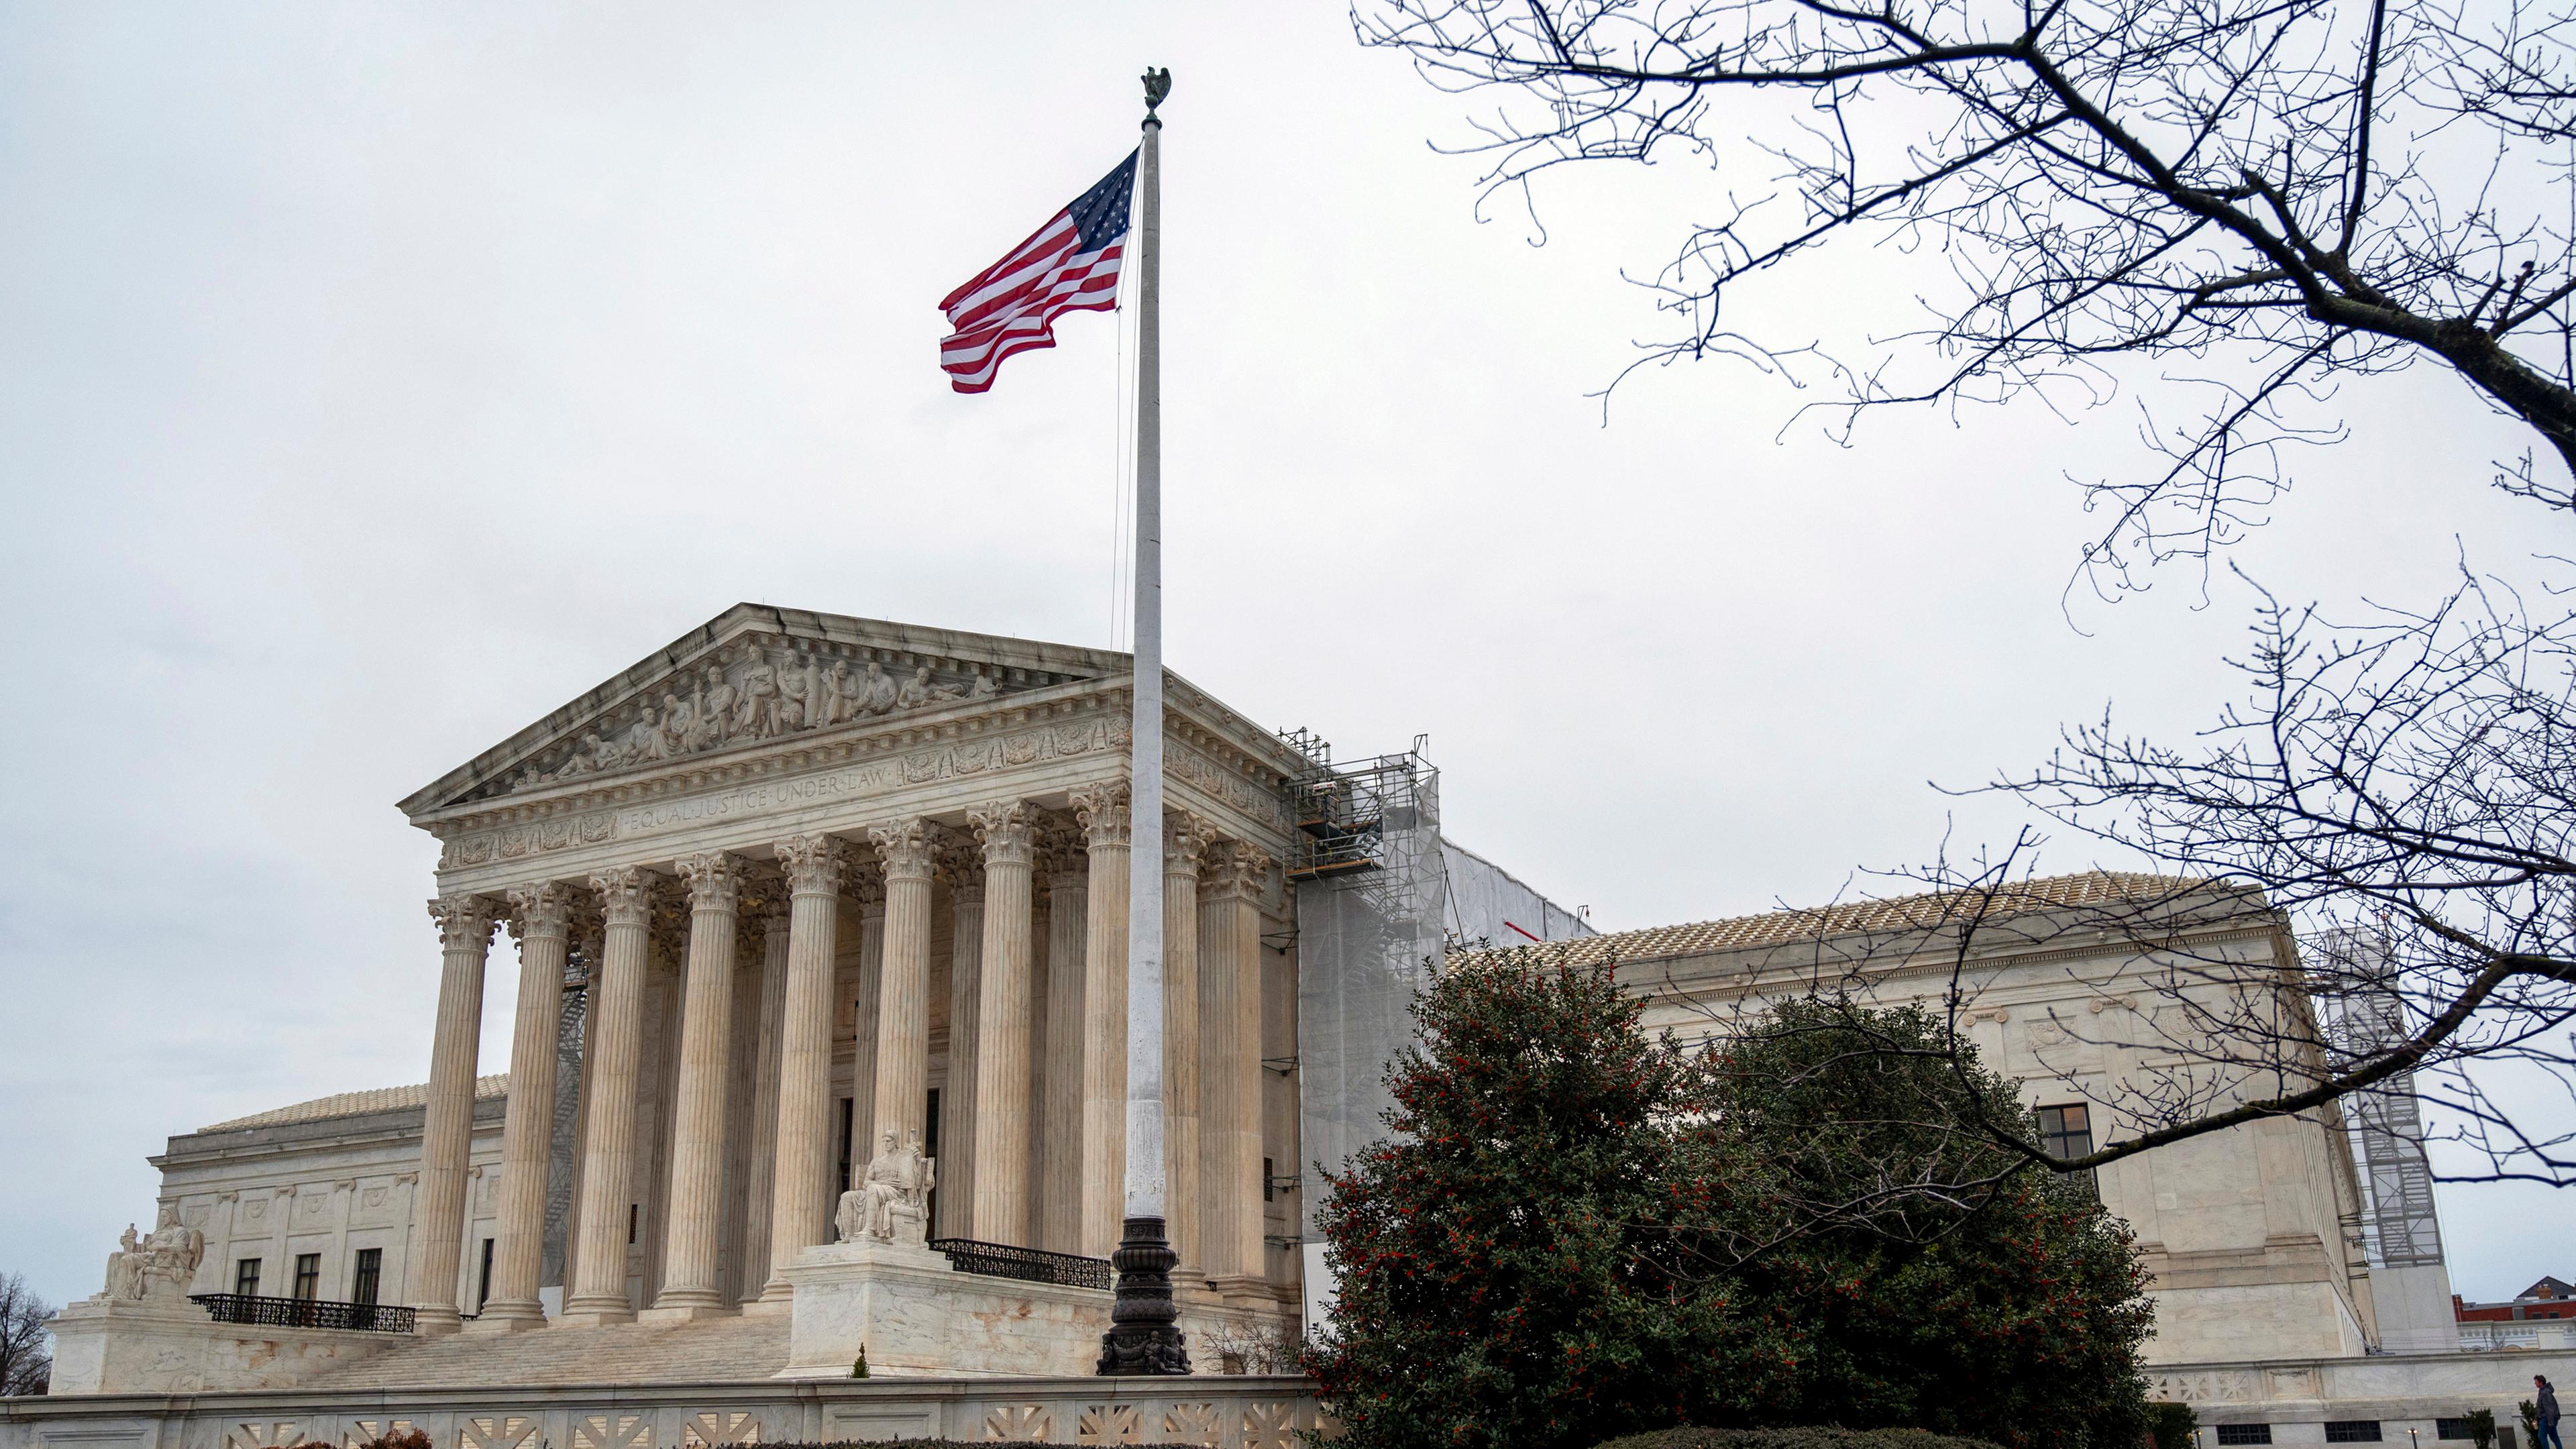 US Supreme Court in Washington DC.